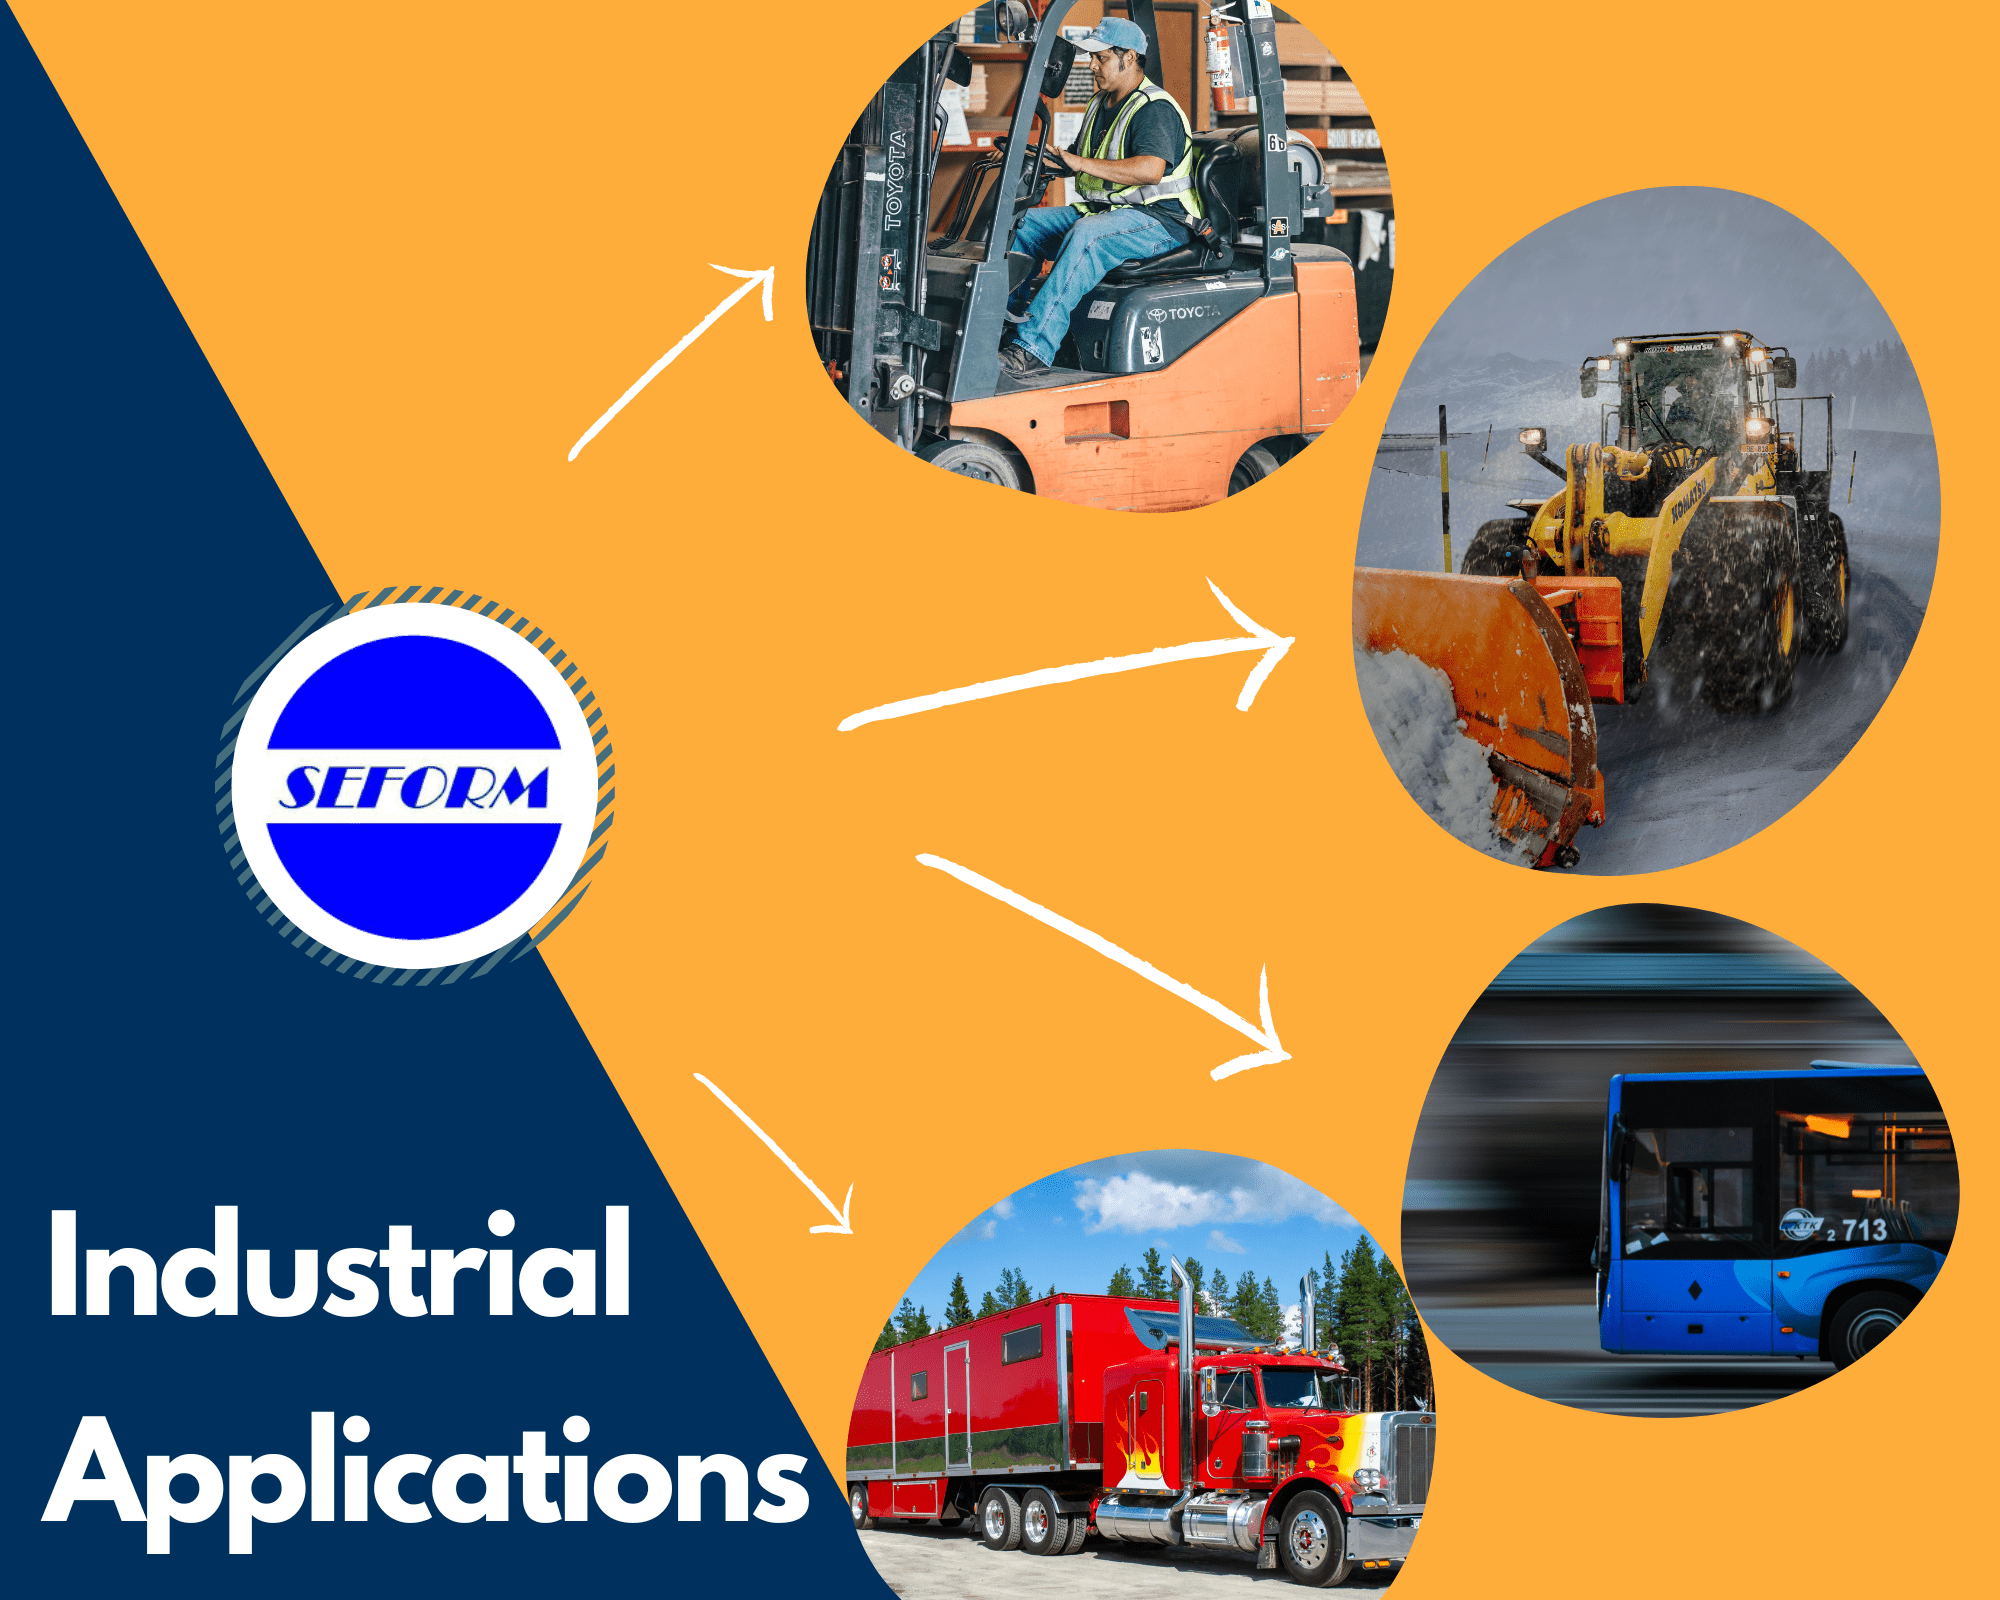 industrial applications include forklift, snowplow, bus, truck, etc.